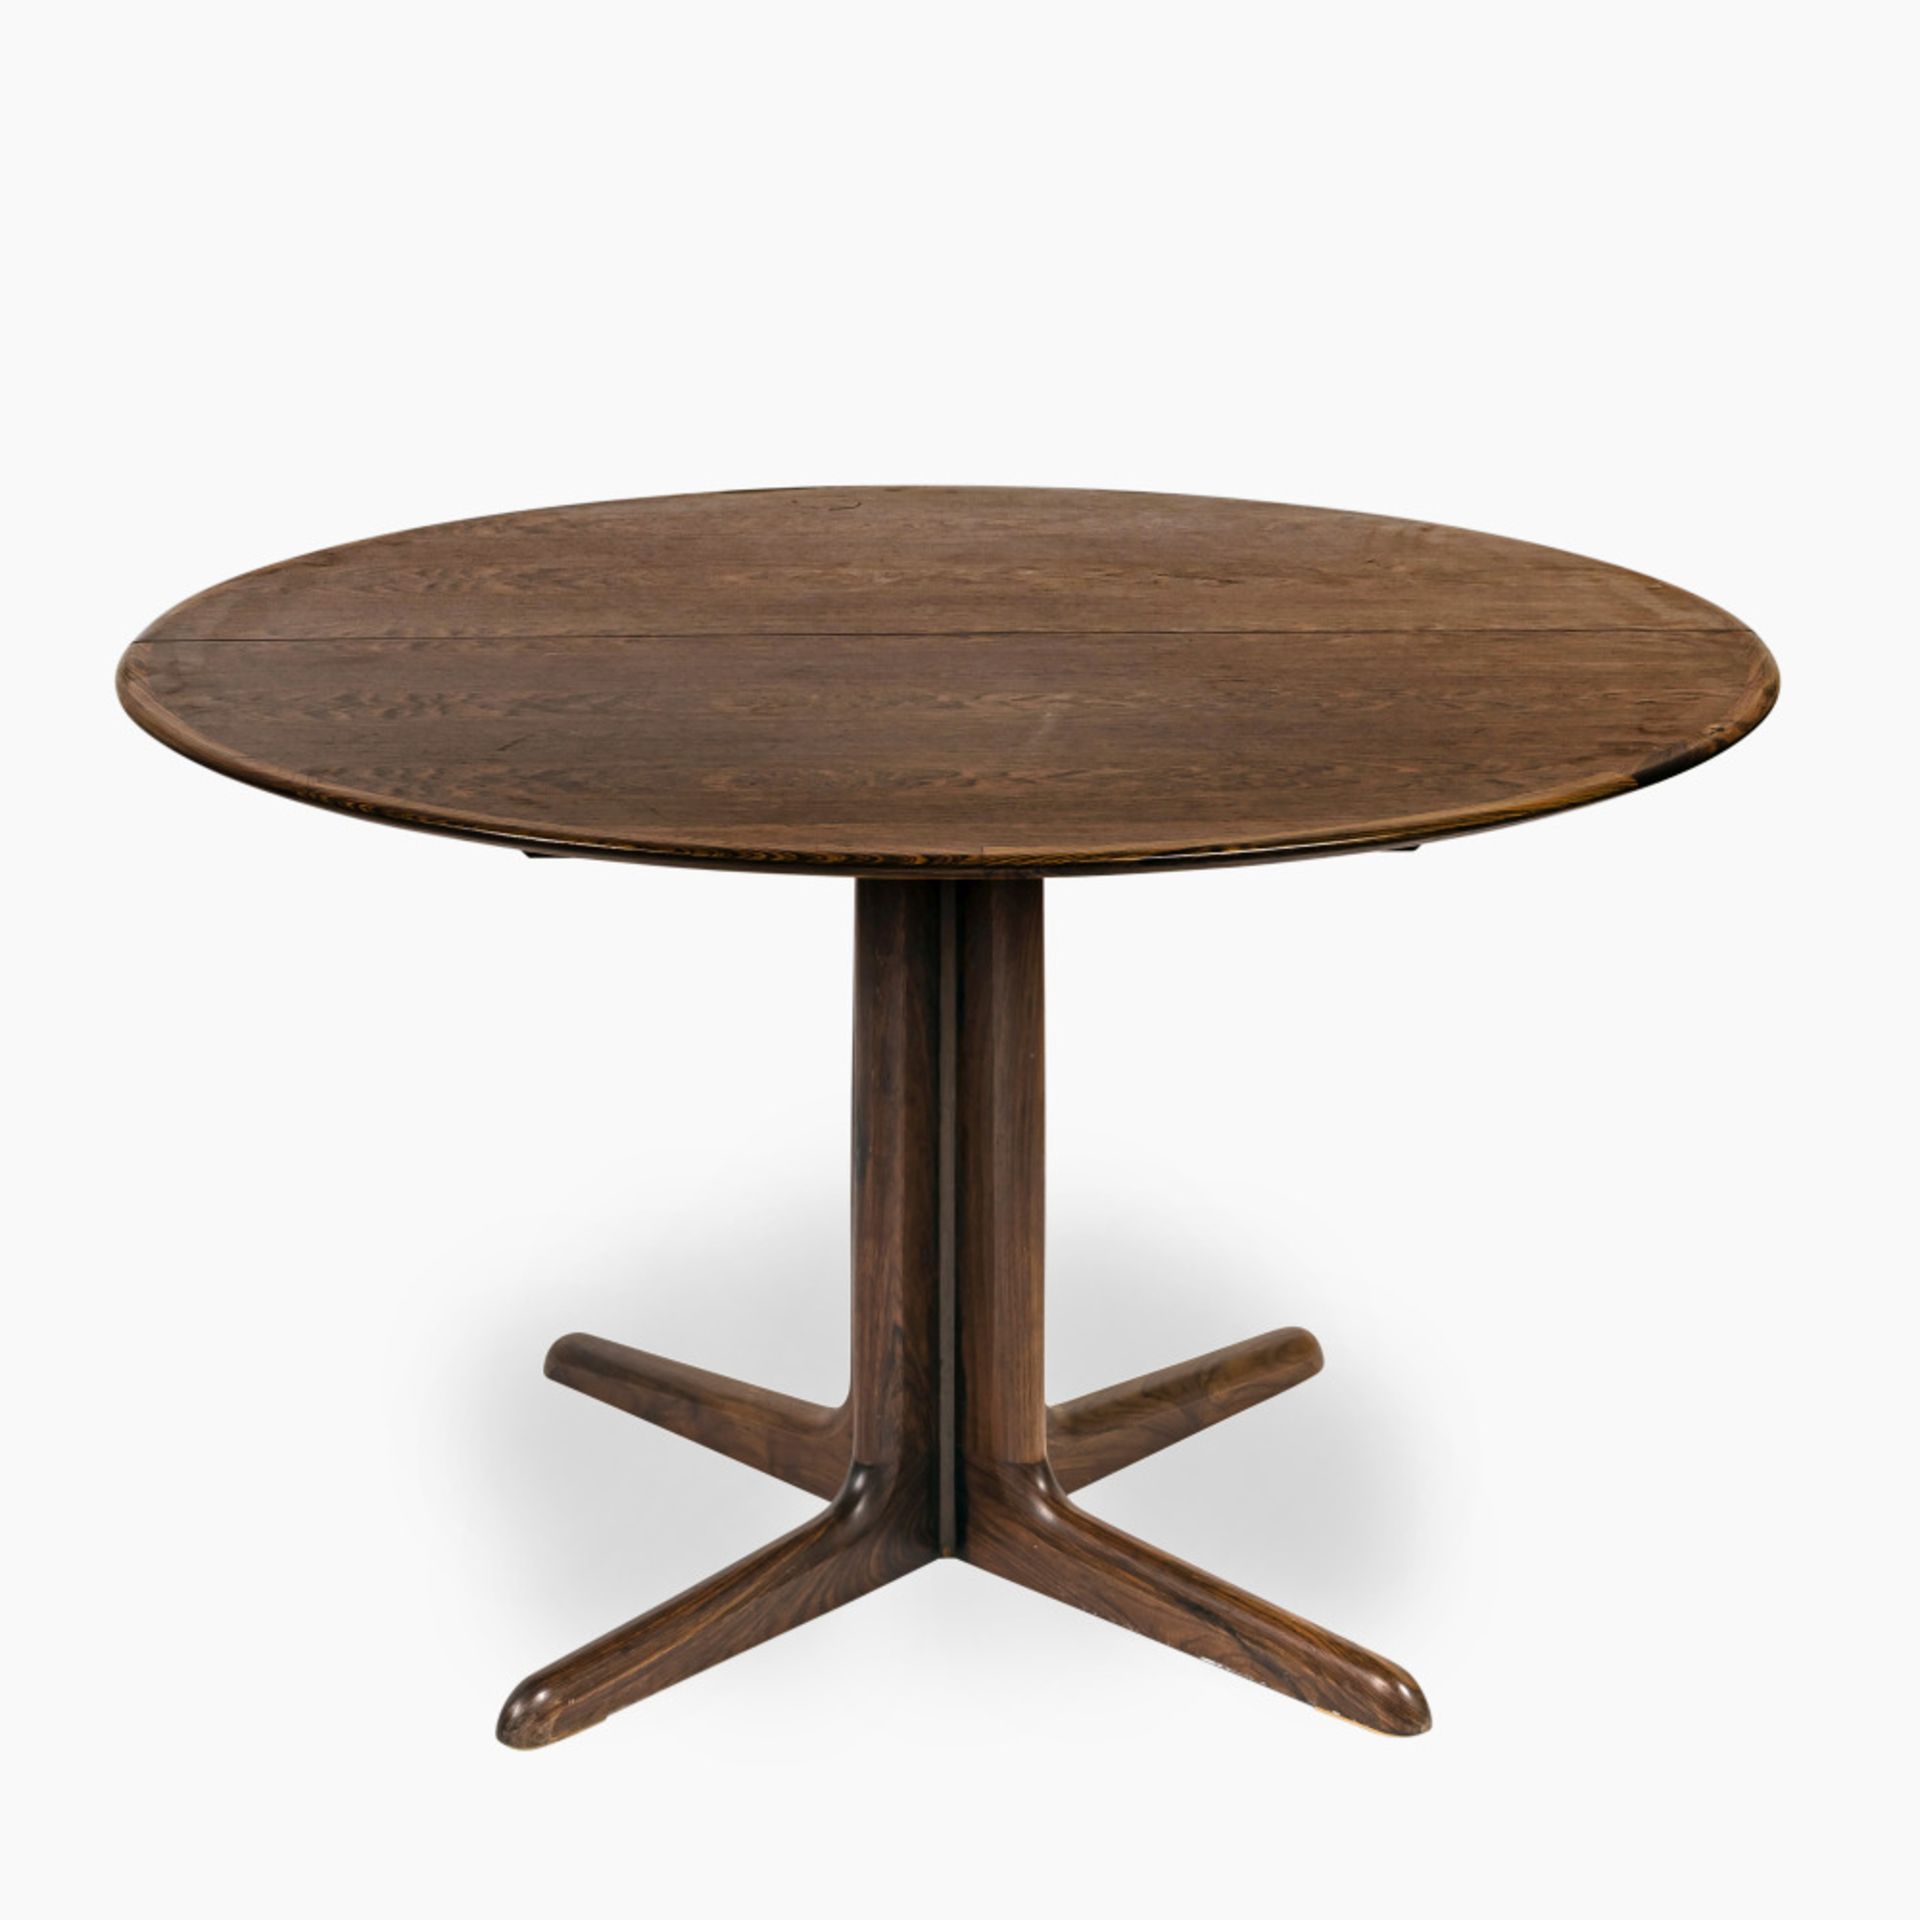 A table - design by Niels O Möller for JL Moller, Denmark, 1960s